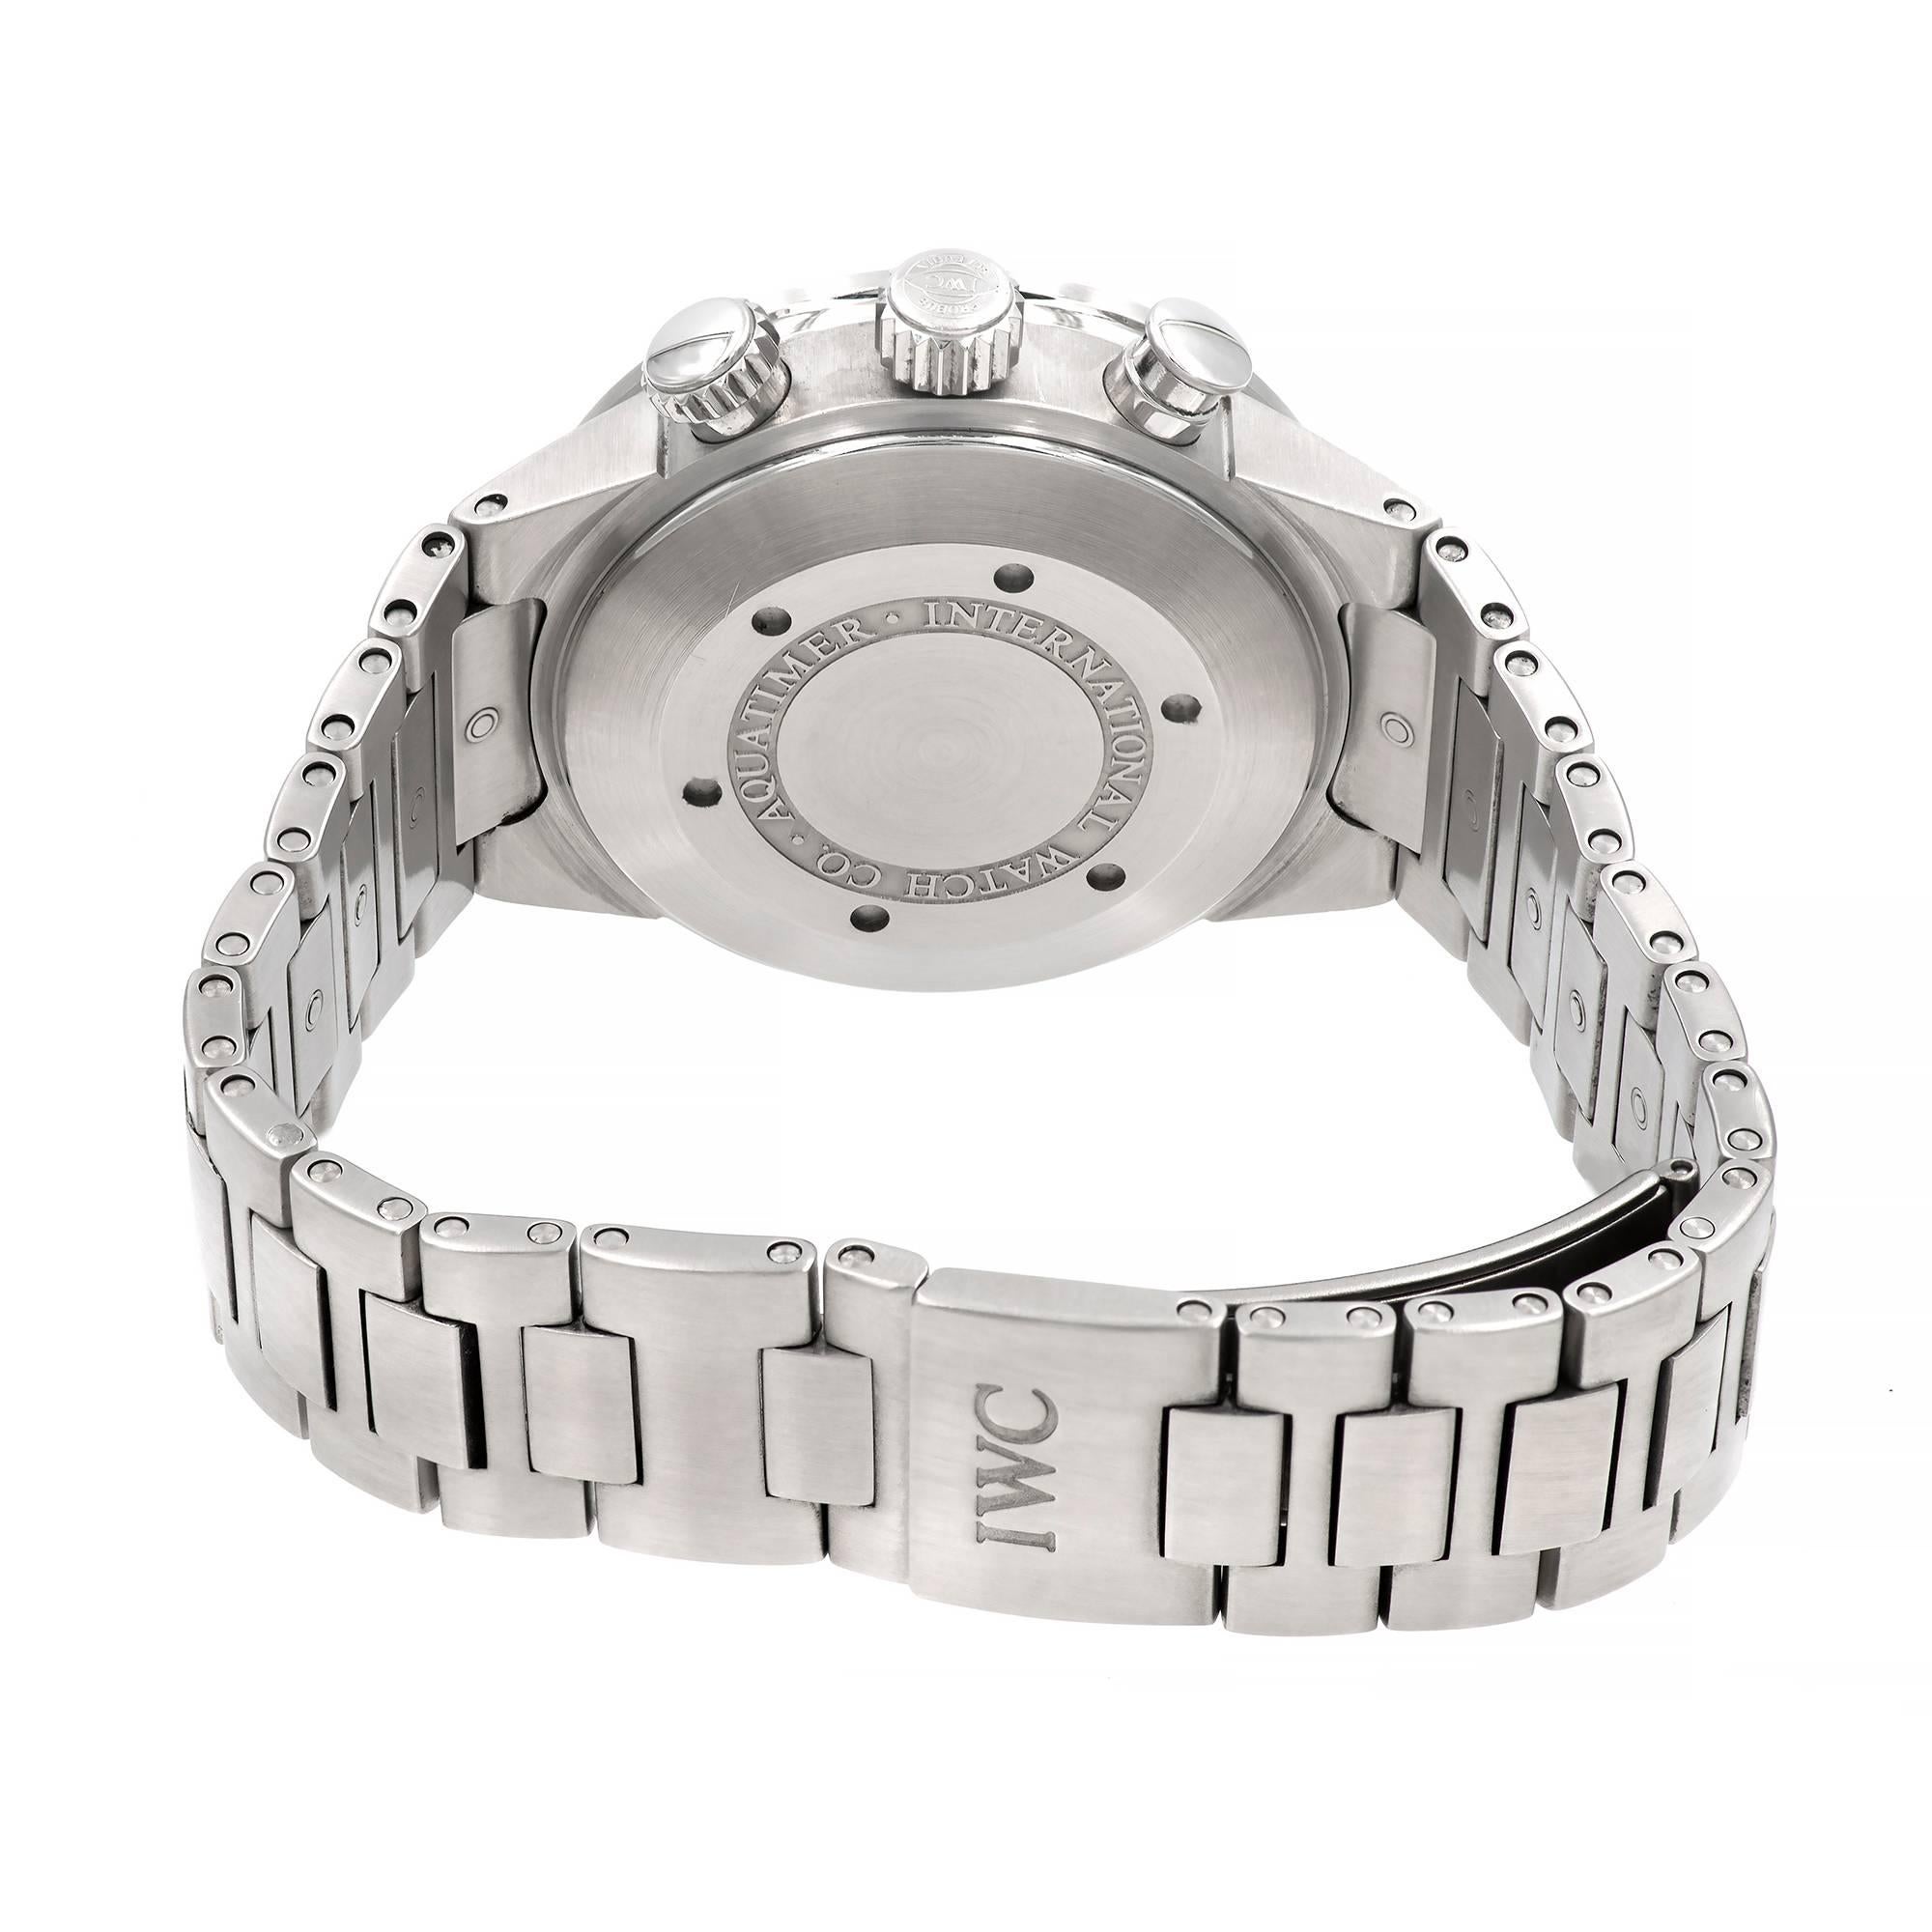 IWC Stainless Steel Aquatimer Chronograph Automatic Wristwatch 1